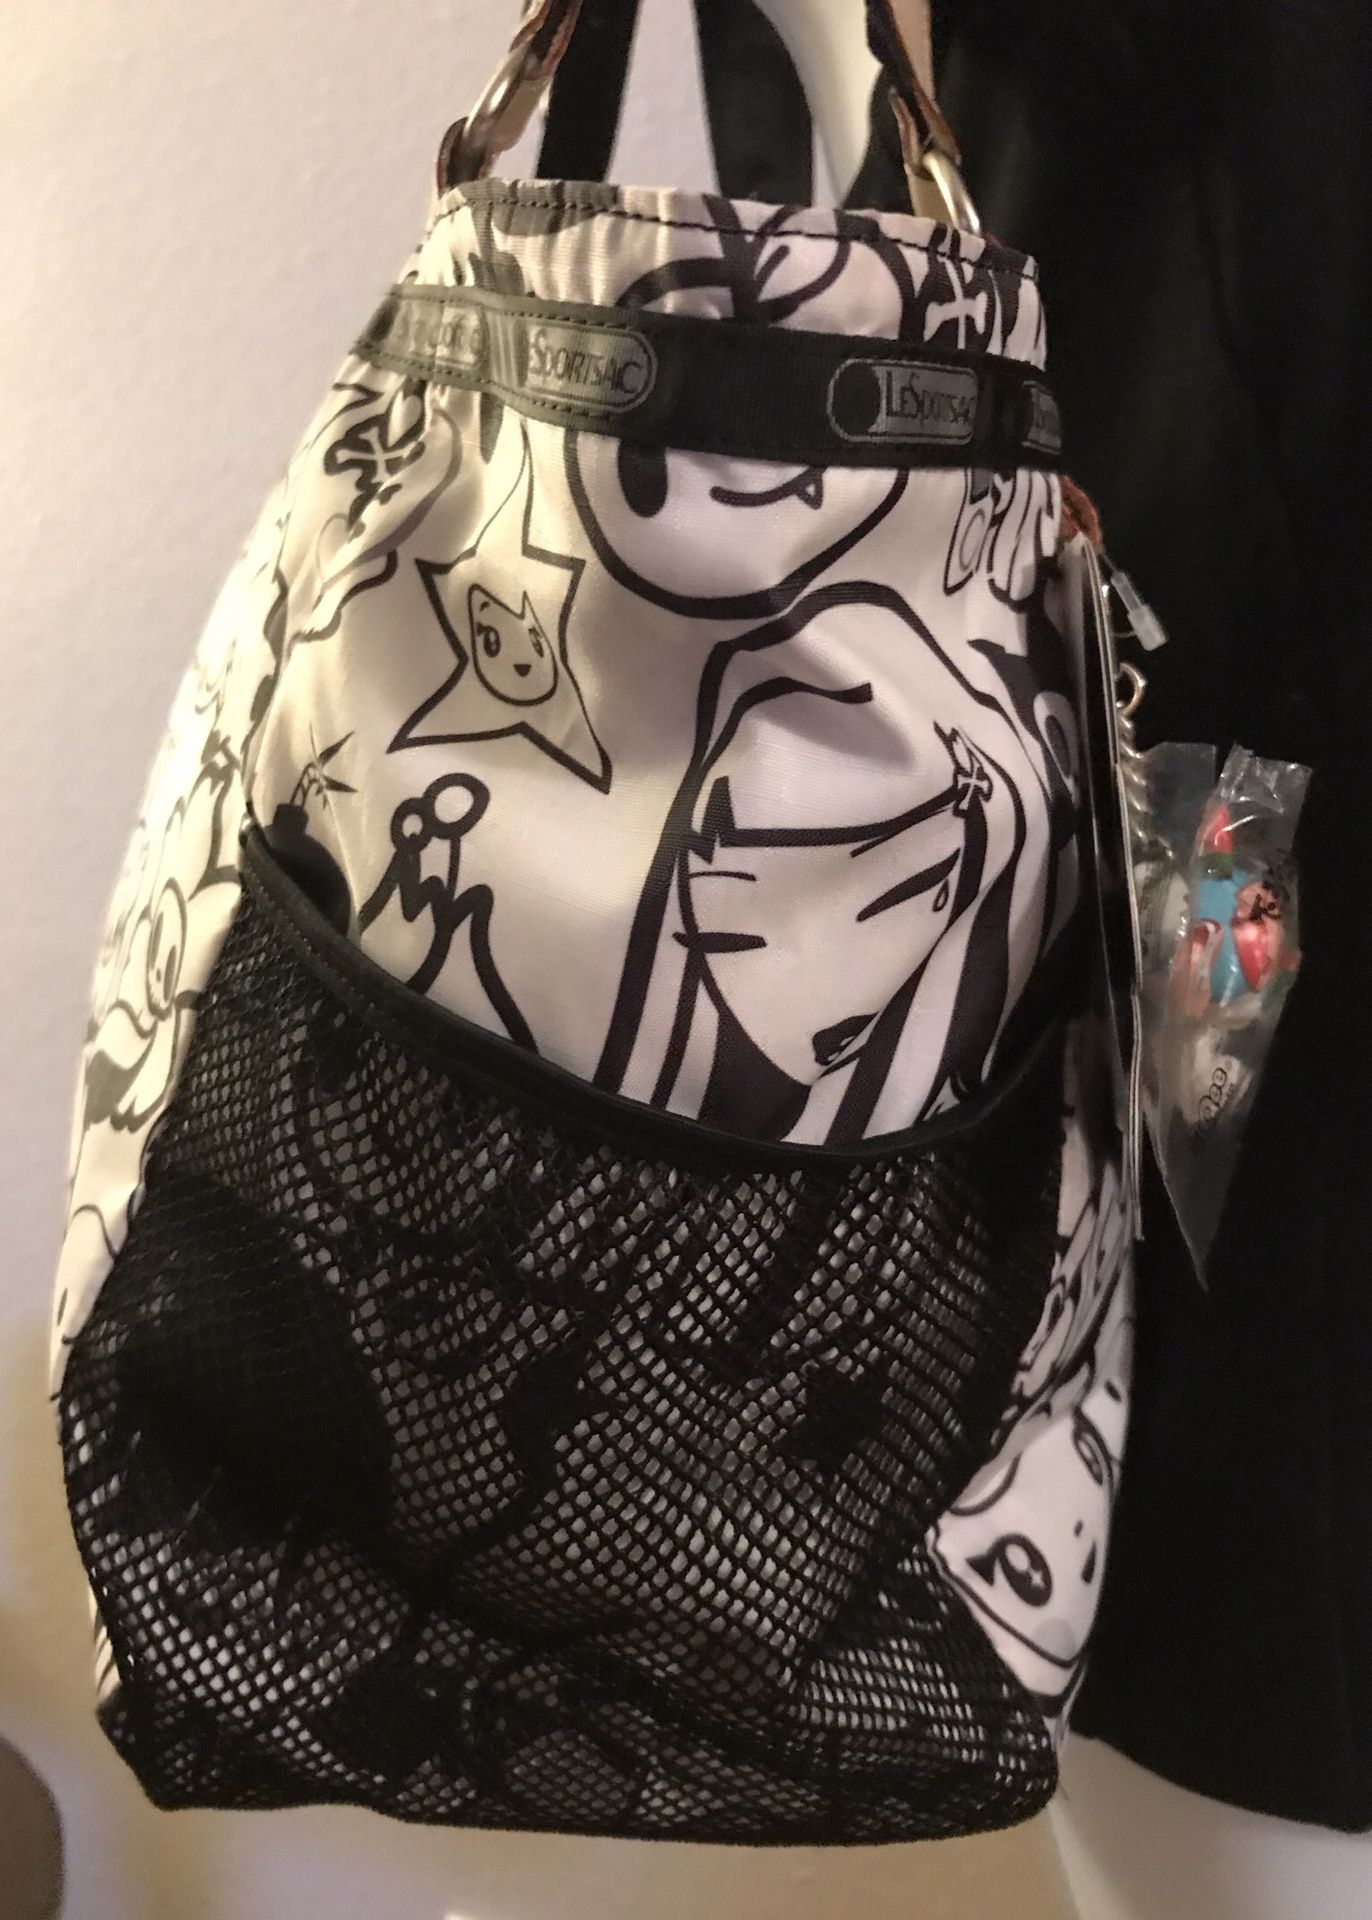 Tokidoki LeSportsac Tote Bag for Sale in Tacoma, WA - OfferUp